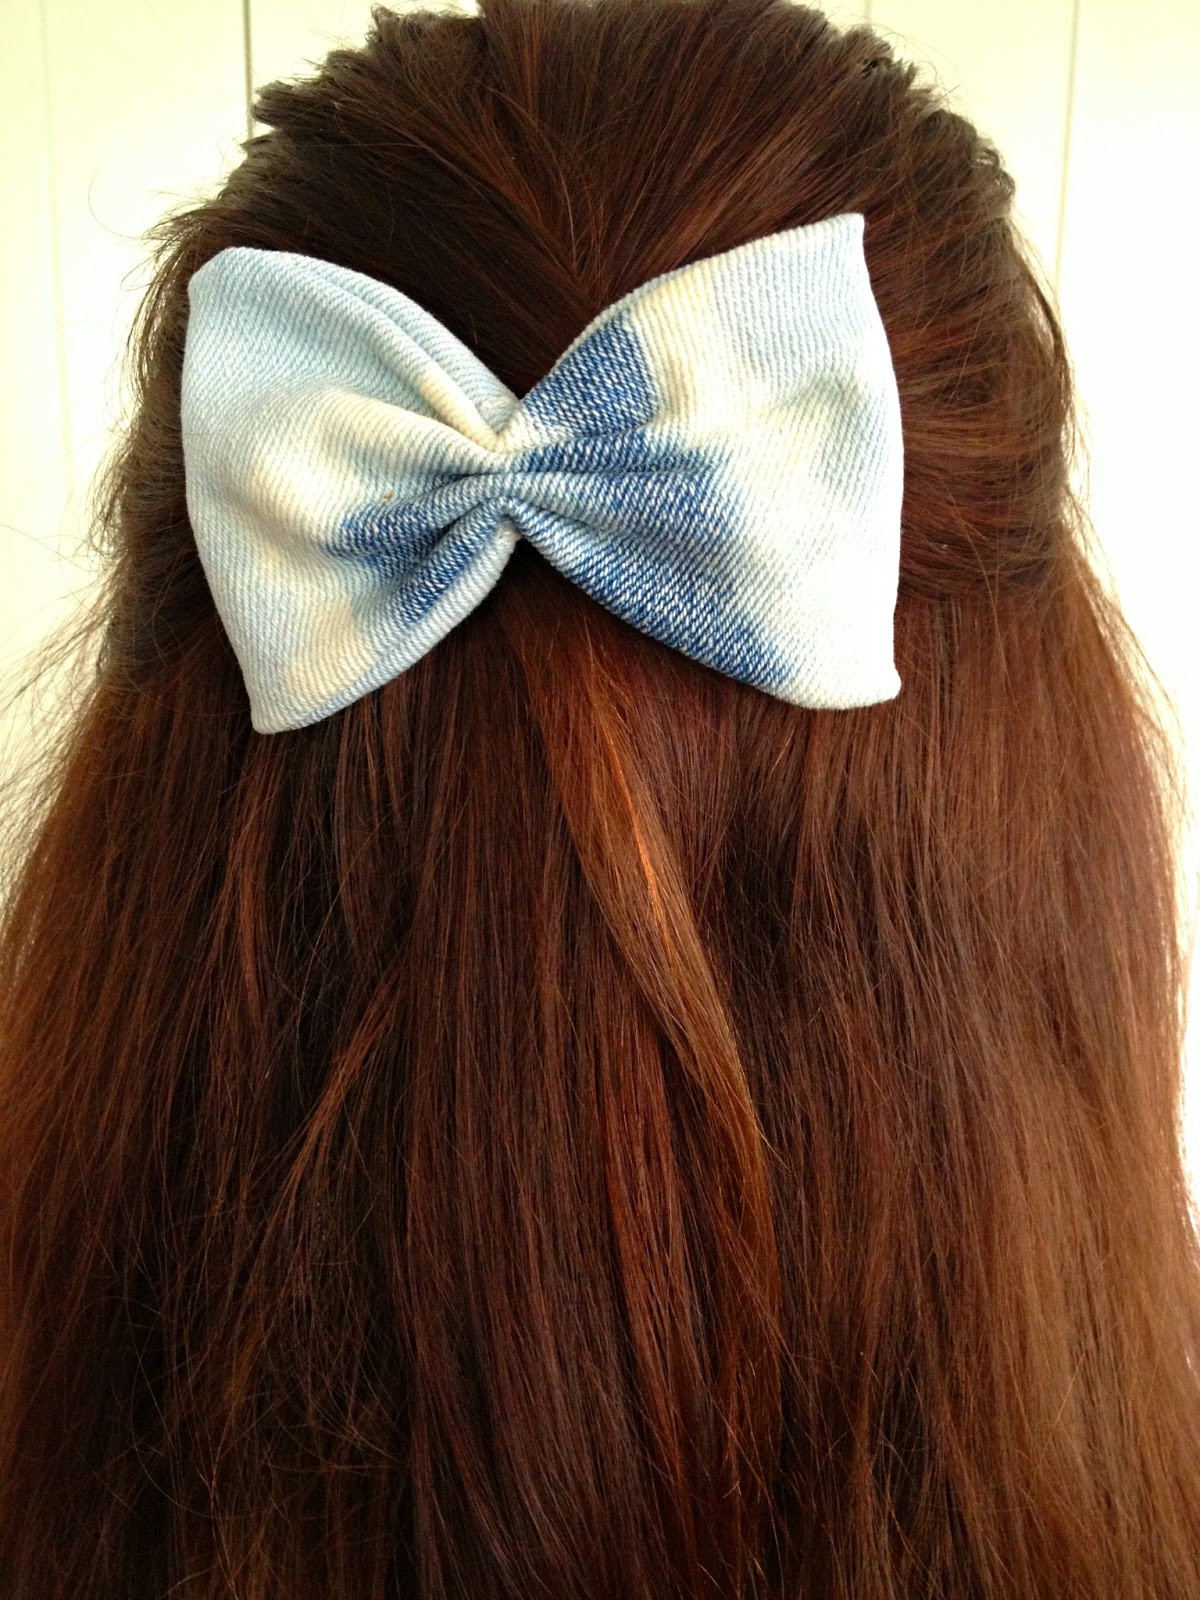 Best ideas about Hair Bows DIY
. Save or Pin Salute to Cute DIY Hair bows Denim scraps tutorial Now.